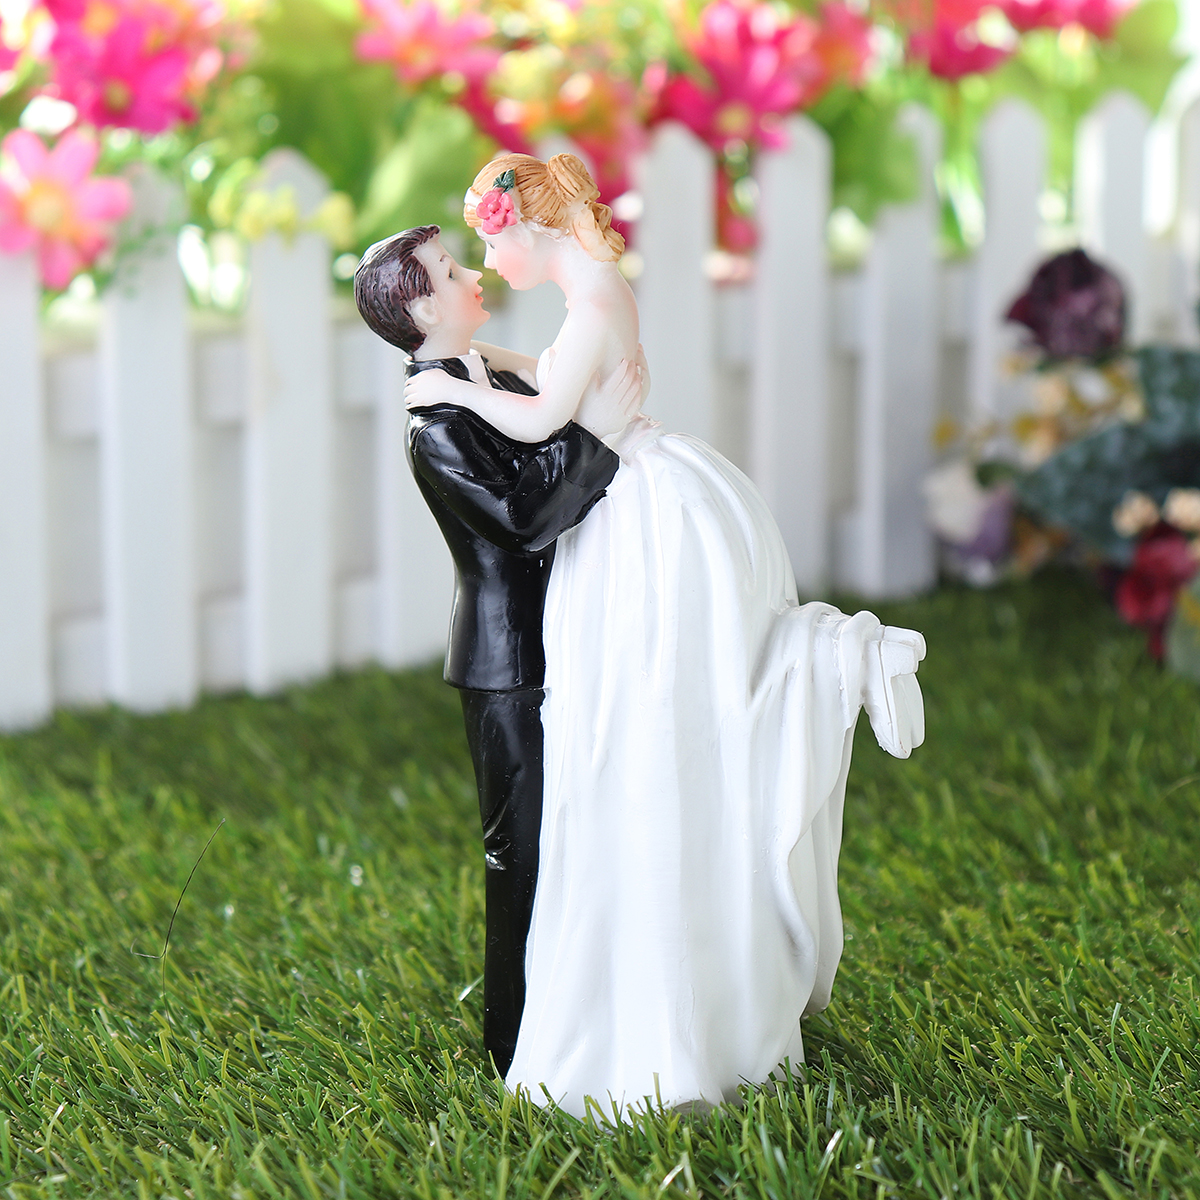 Romantic-Funny-Wedding-Cake-Topper-Figure-Bride-Groom-Couple-Bridal-Decorations-1421525-5